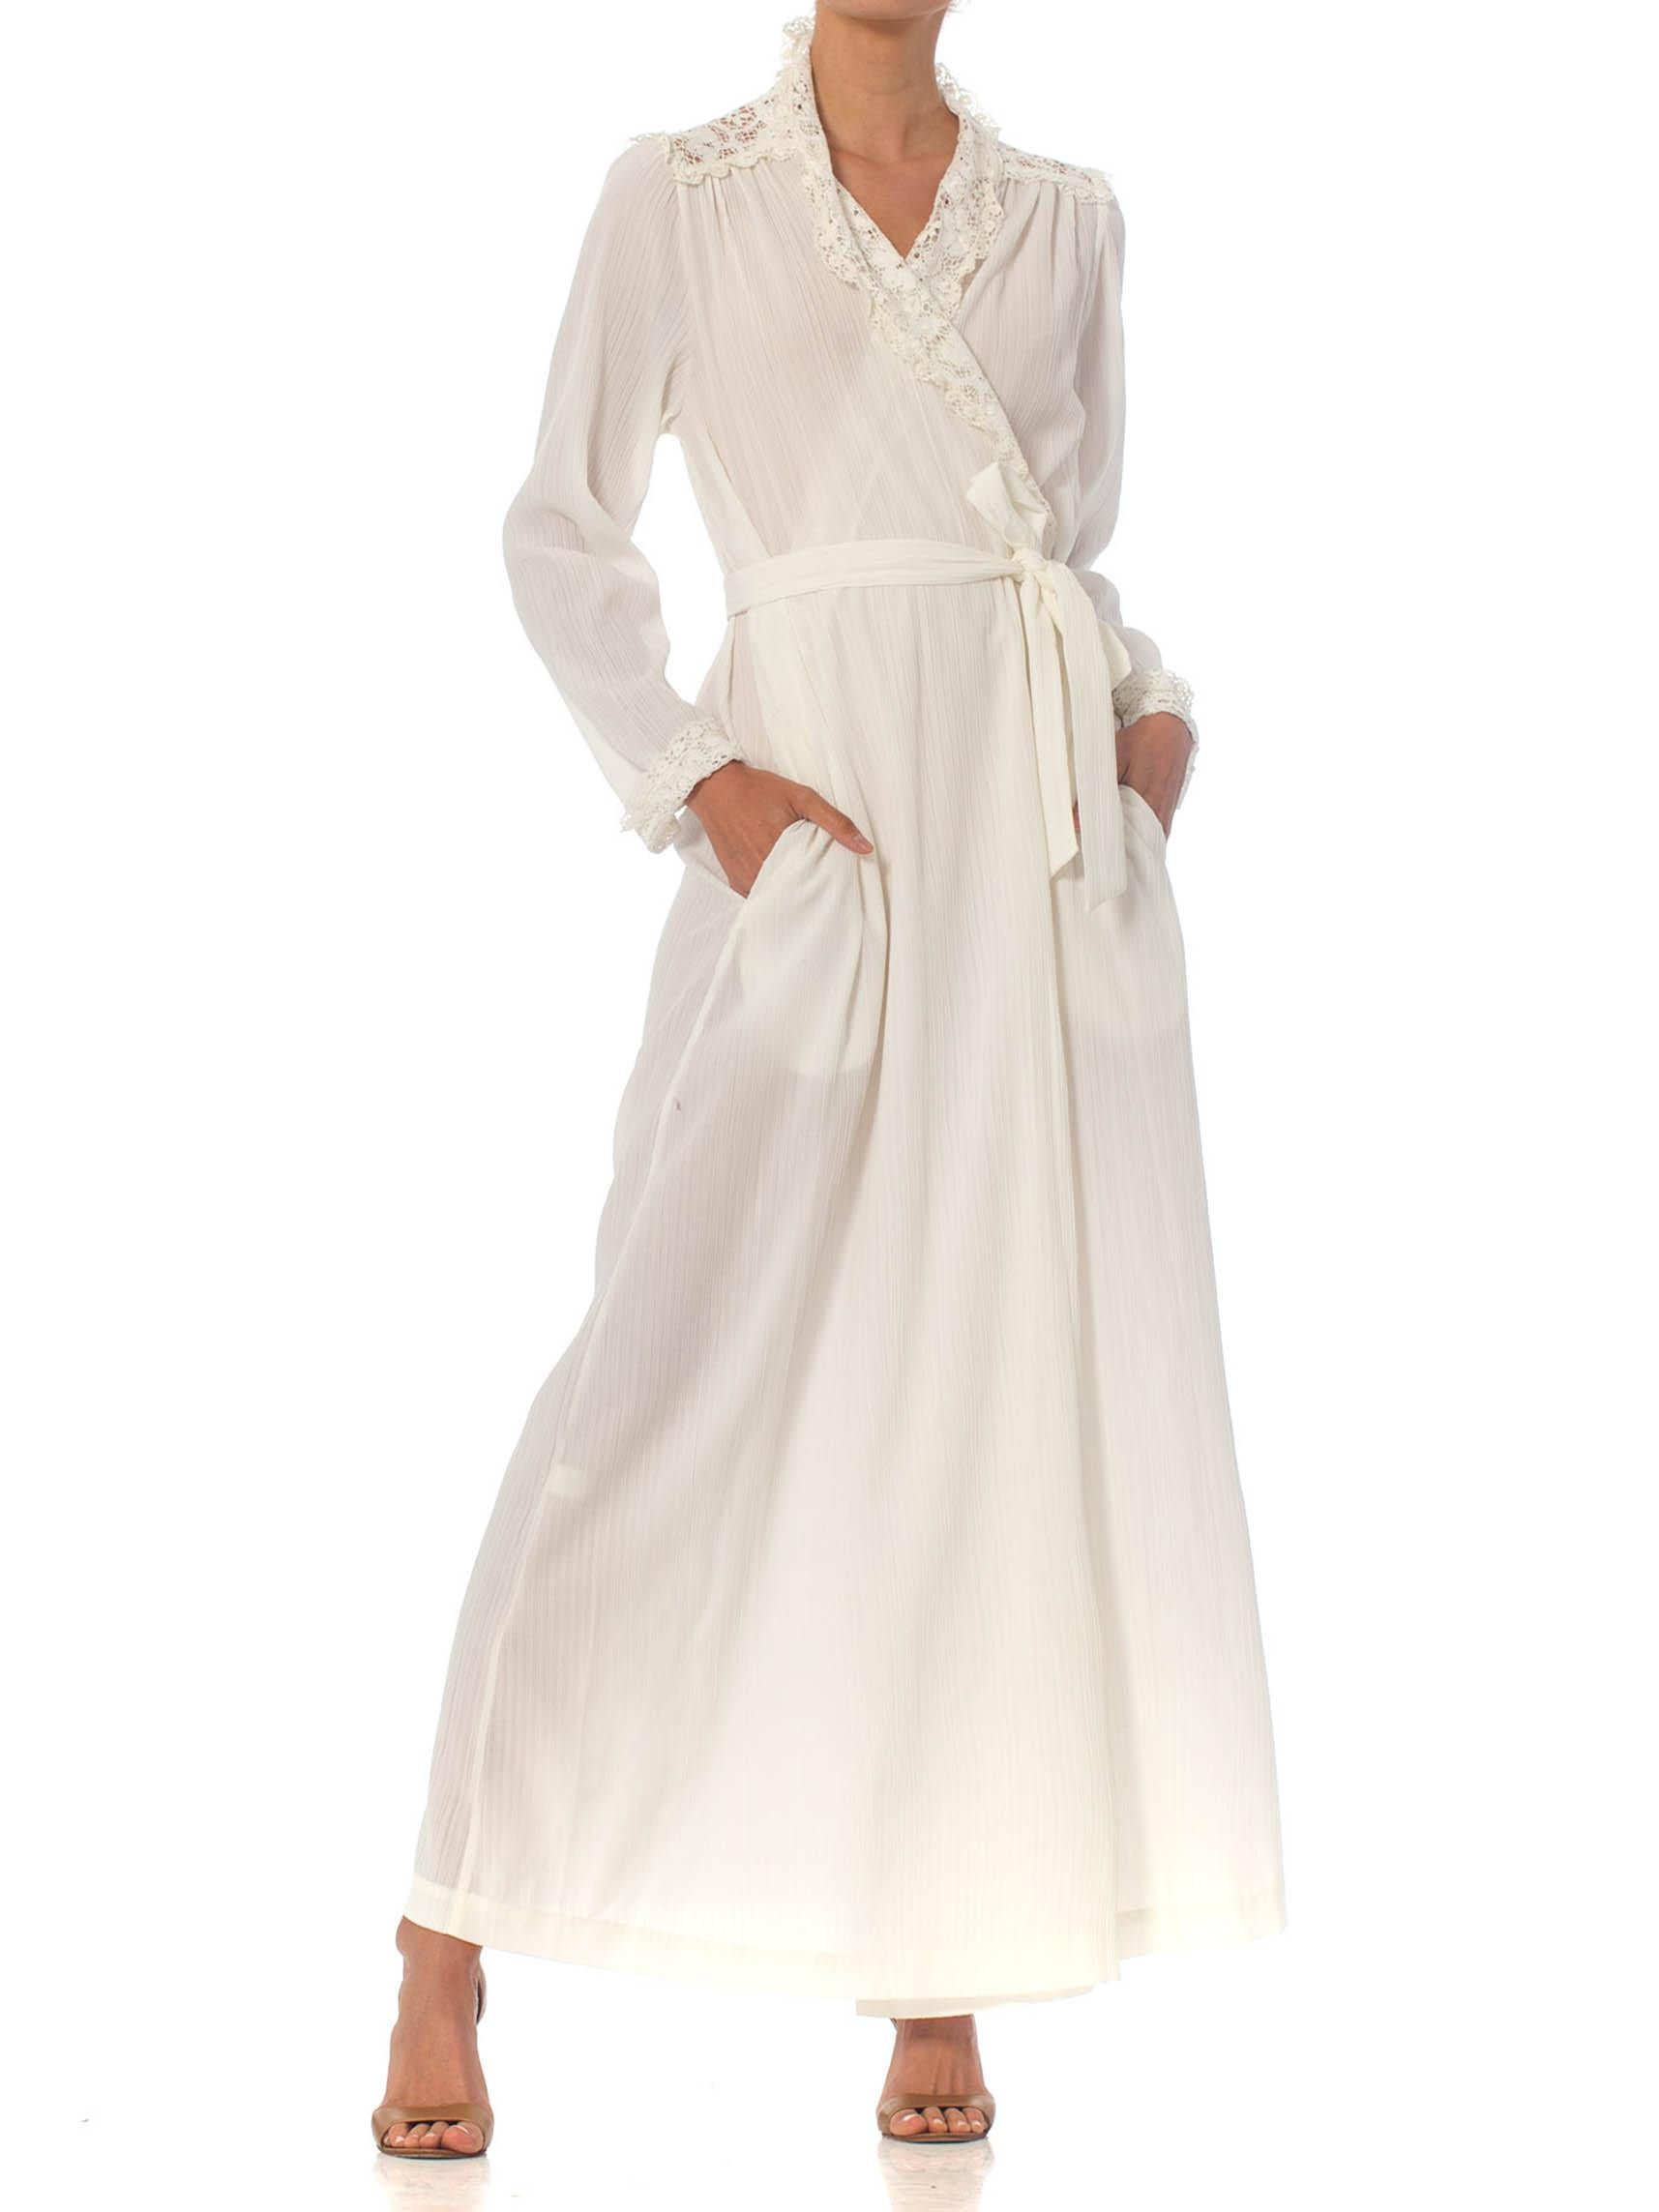 Women's 1970S CHRISTIAN DIOR White Cotton & Lace Wrap Dress / Robe